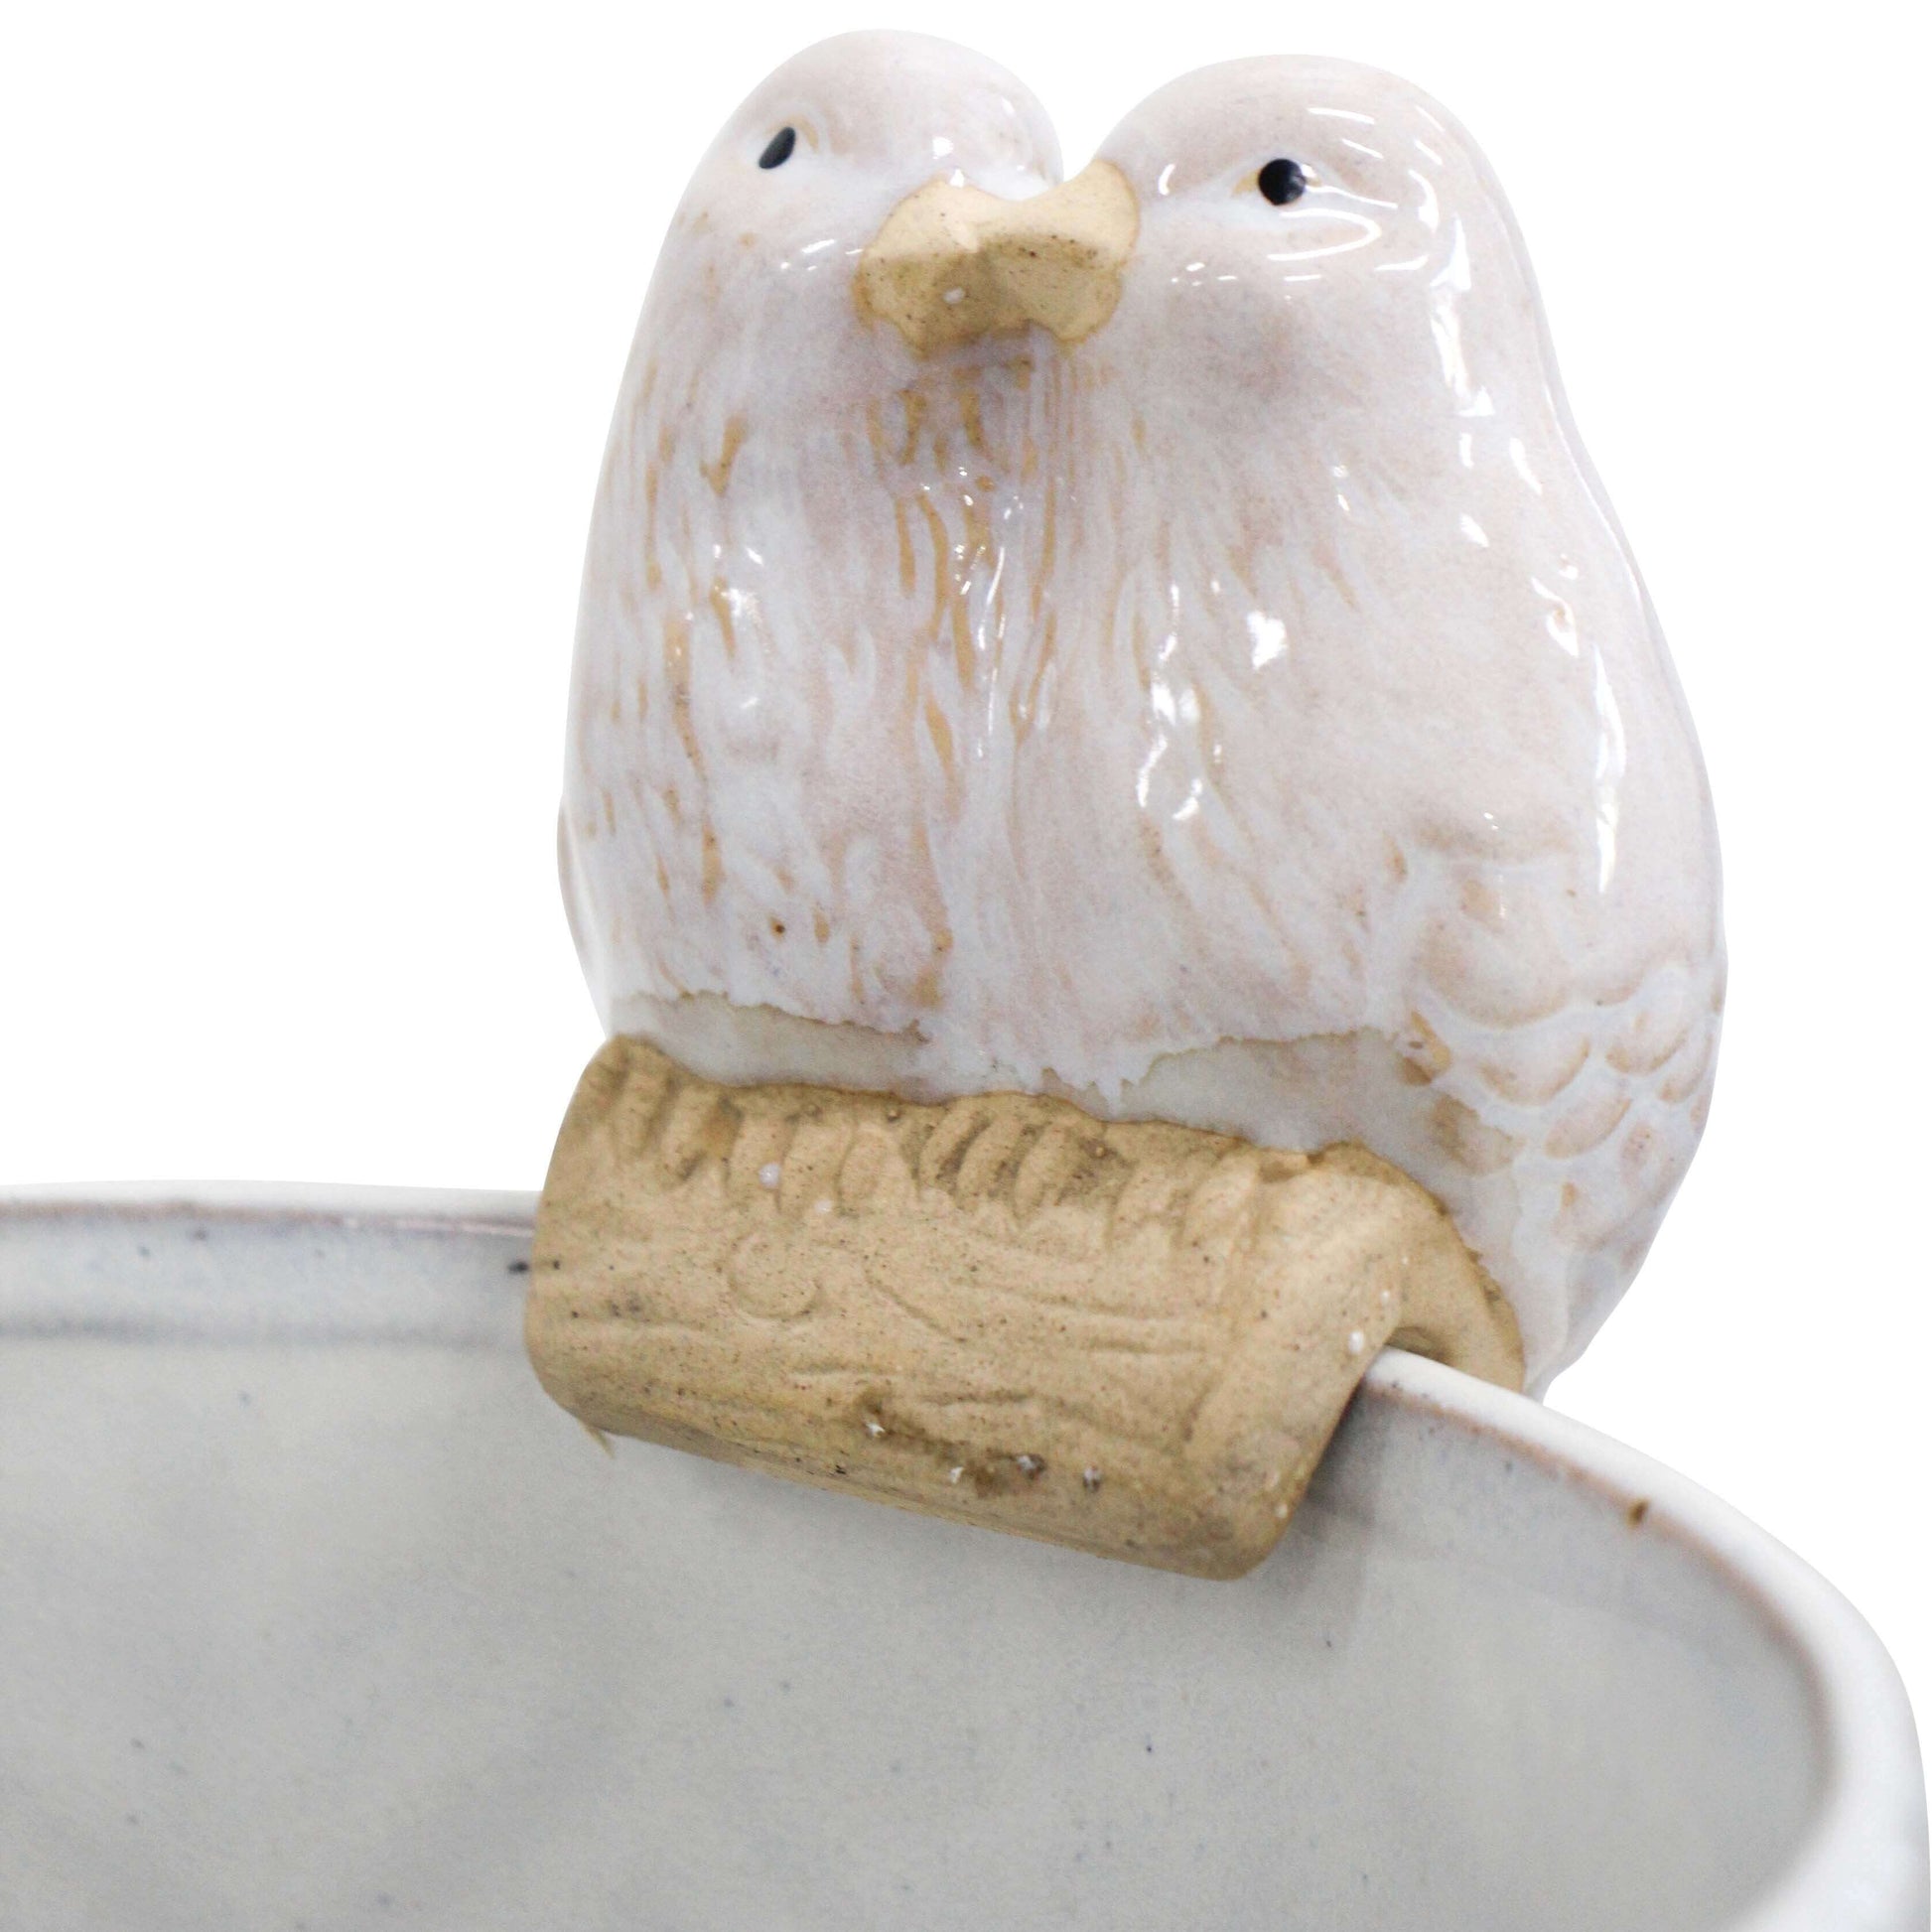 Bird Pot Sitter Hanger Planter x 2 French Love - The Renmy Store Homewares & Gifts 